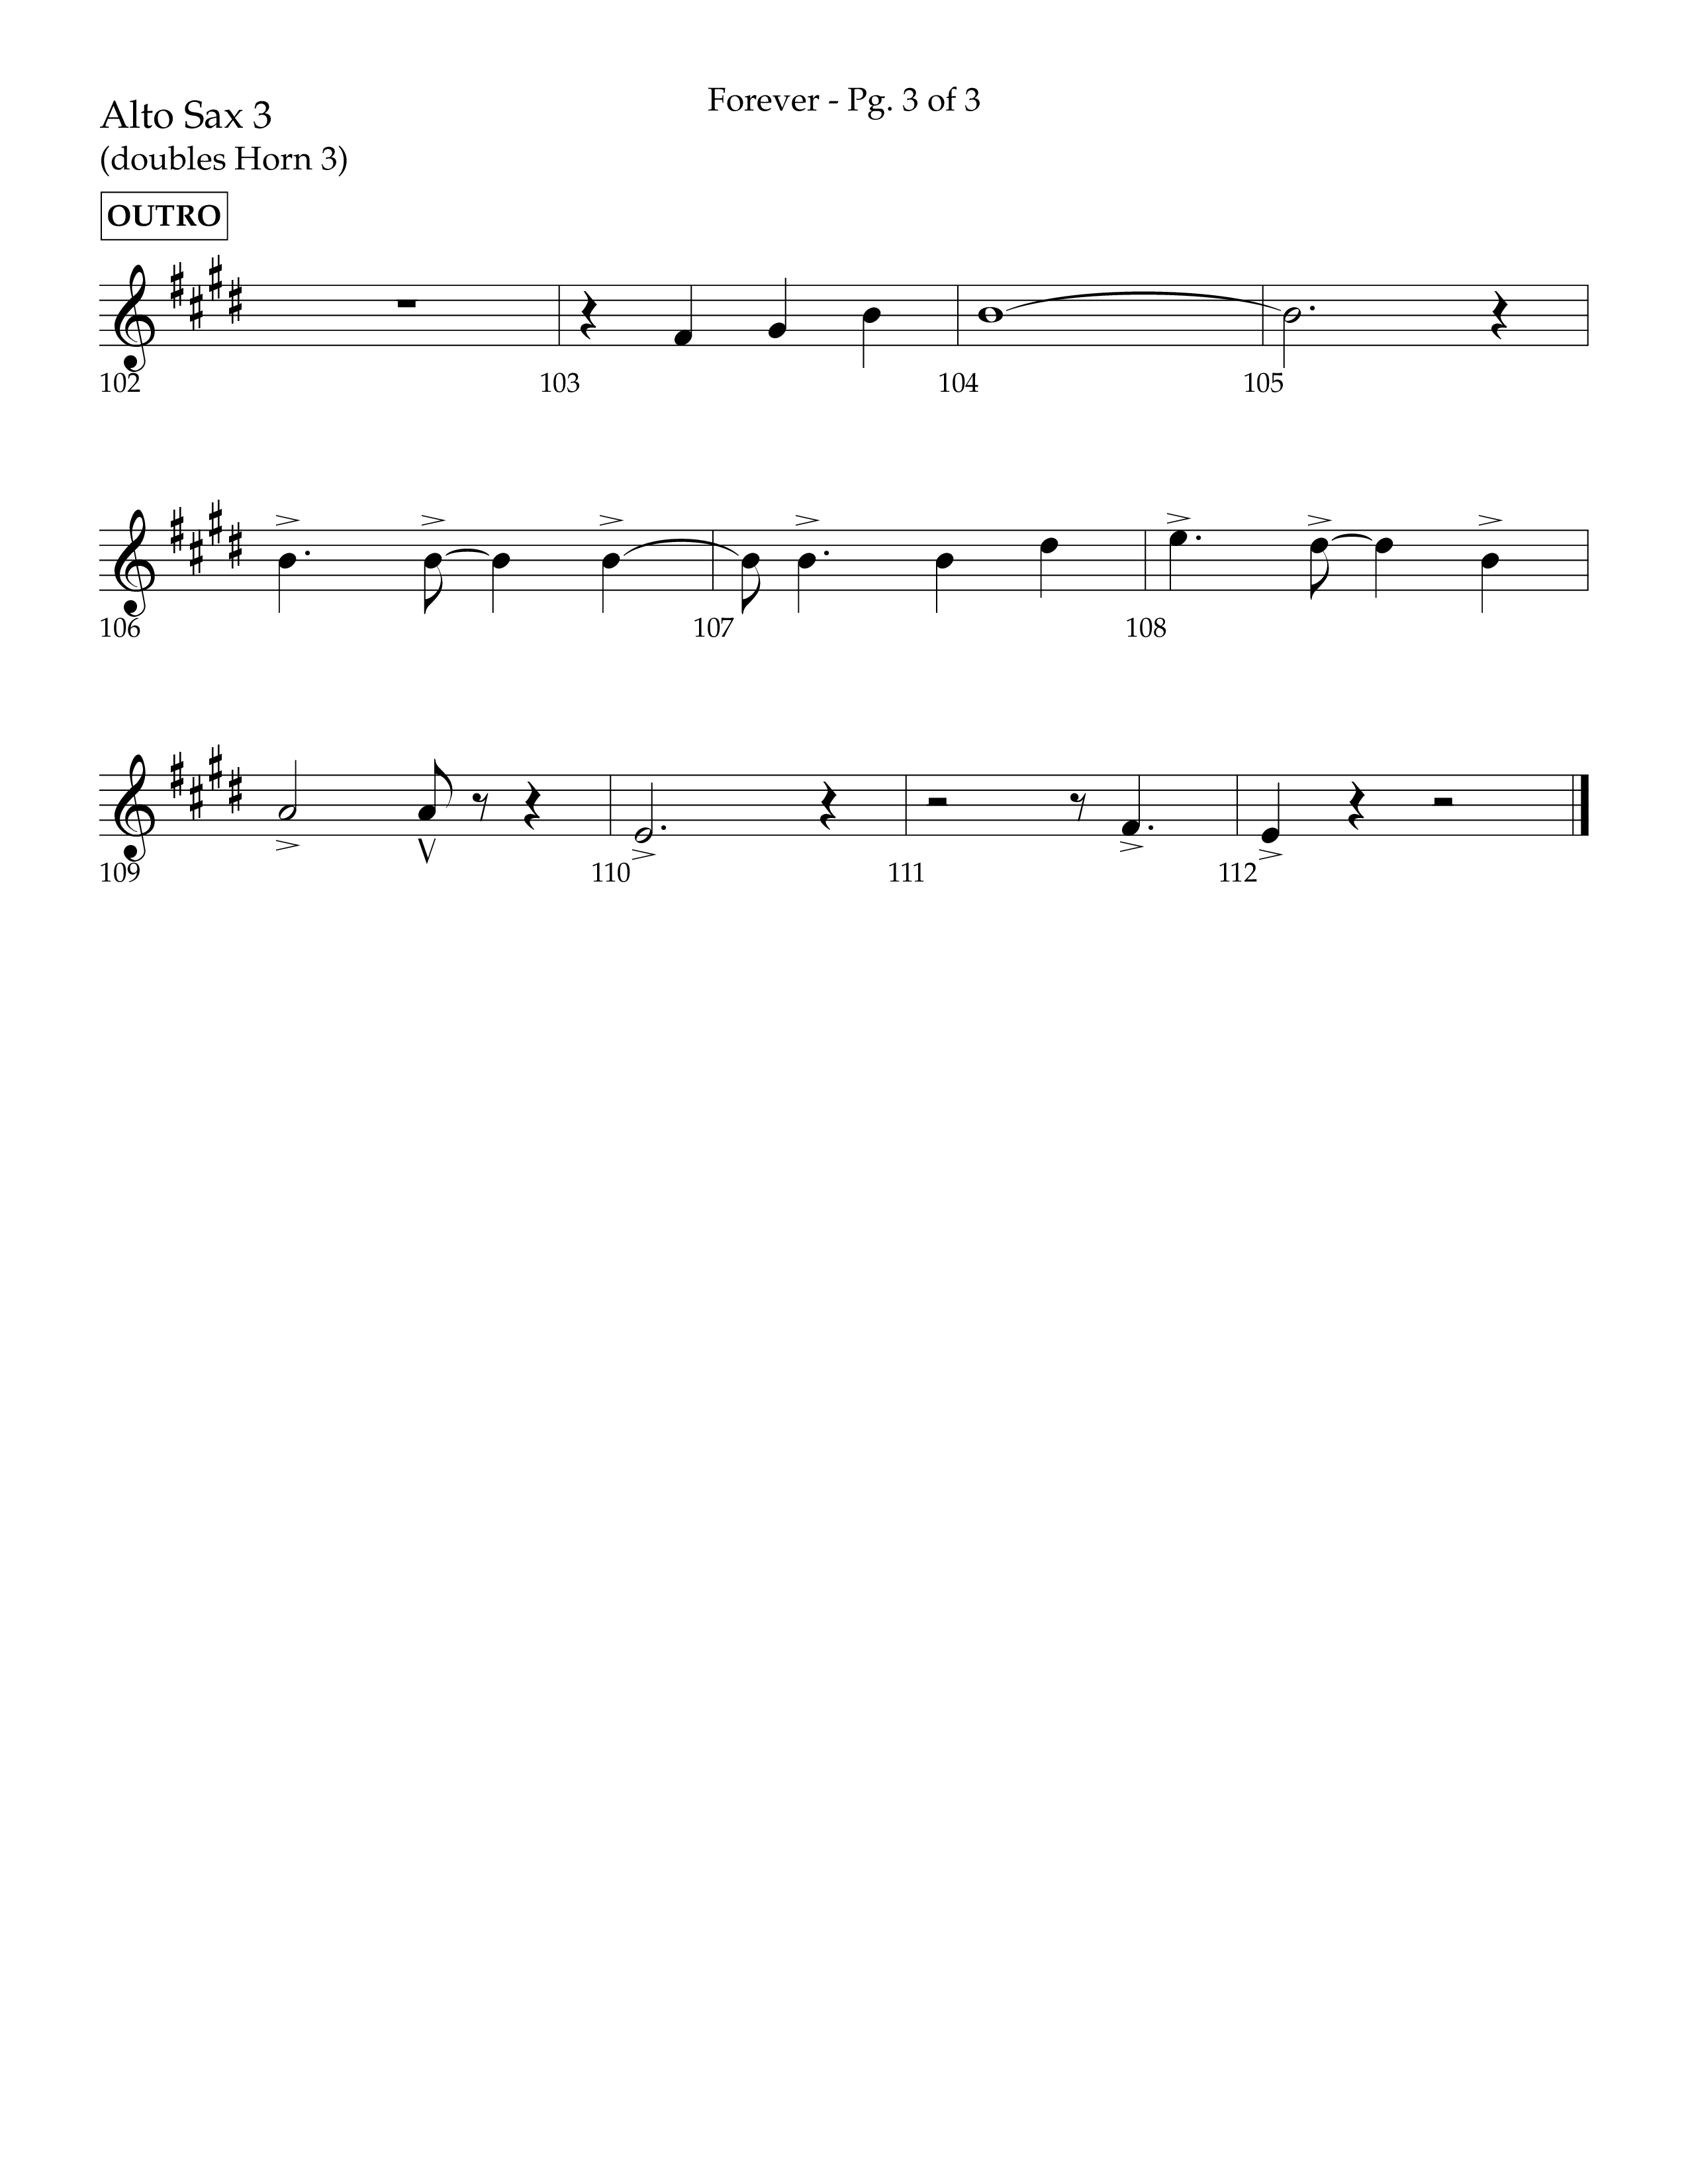 Forever (with Sing Praise) (Choral Anthem SATB) Alto Sax (Lifeway Choral / Arr. Danny Zaloudik)